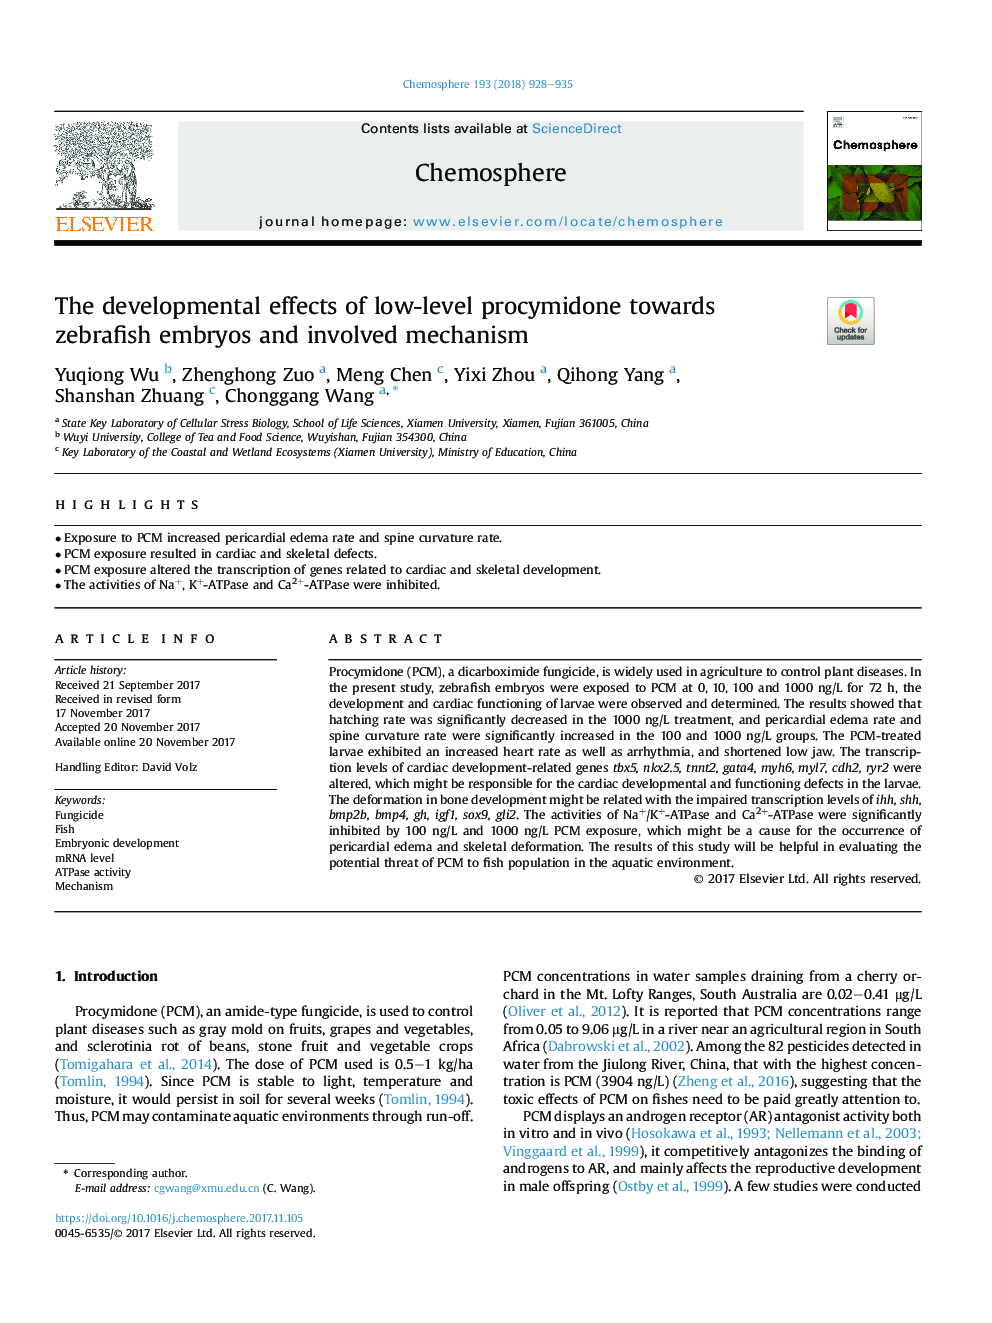 The developmental effects of low-level procymidone towards zebrafish embryos and involved mechanism